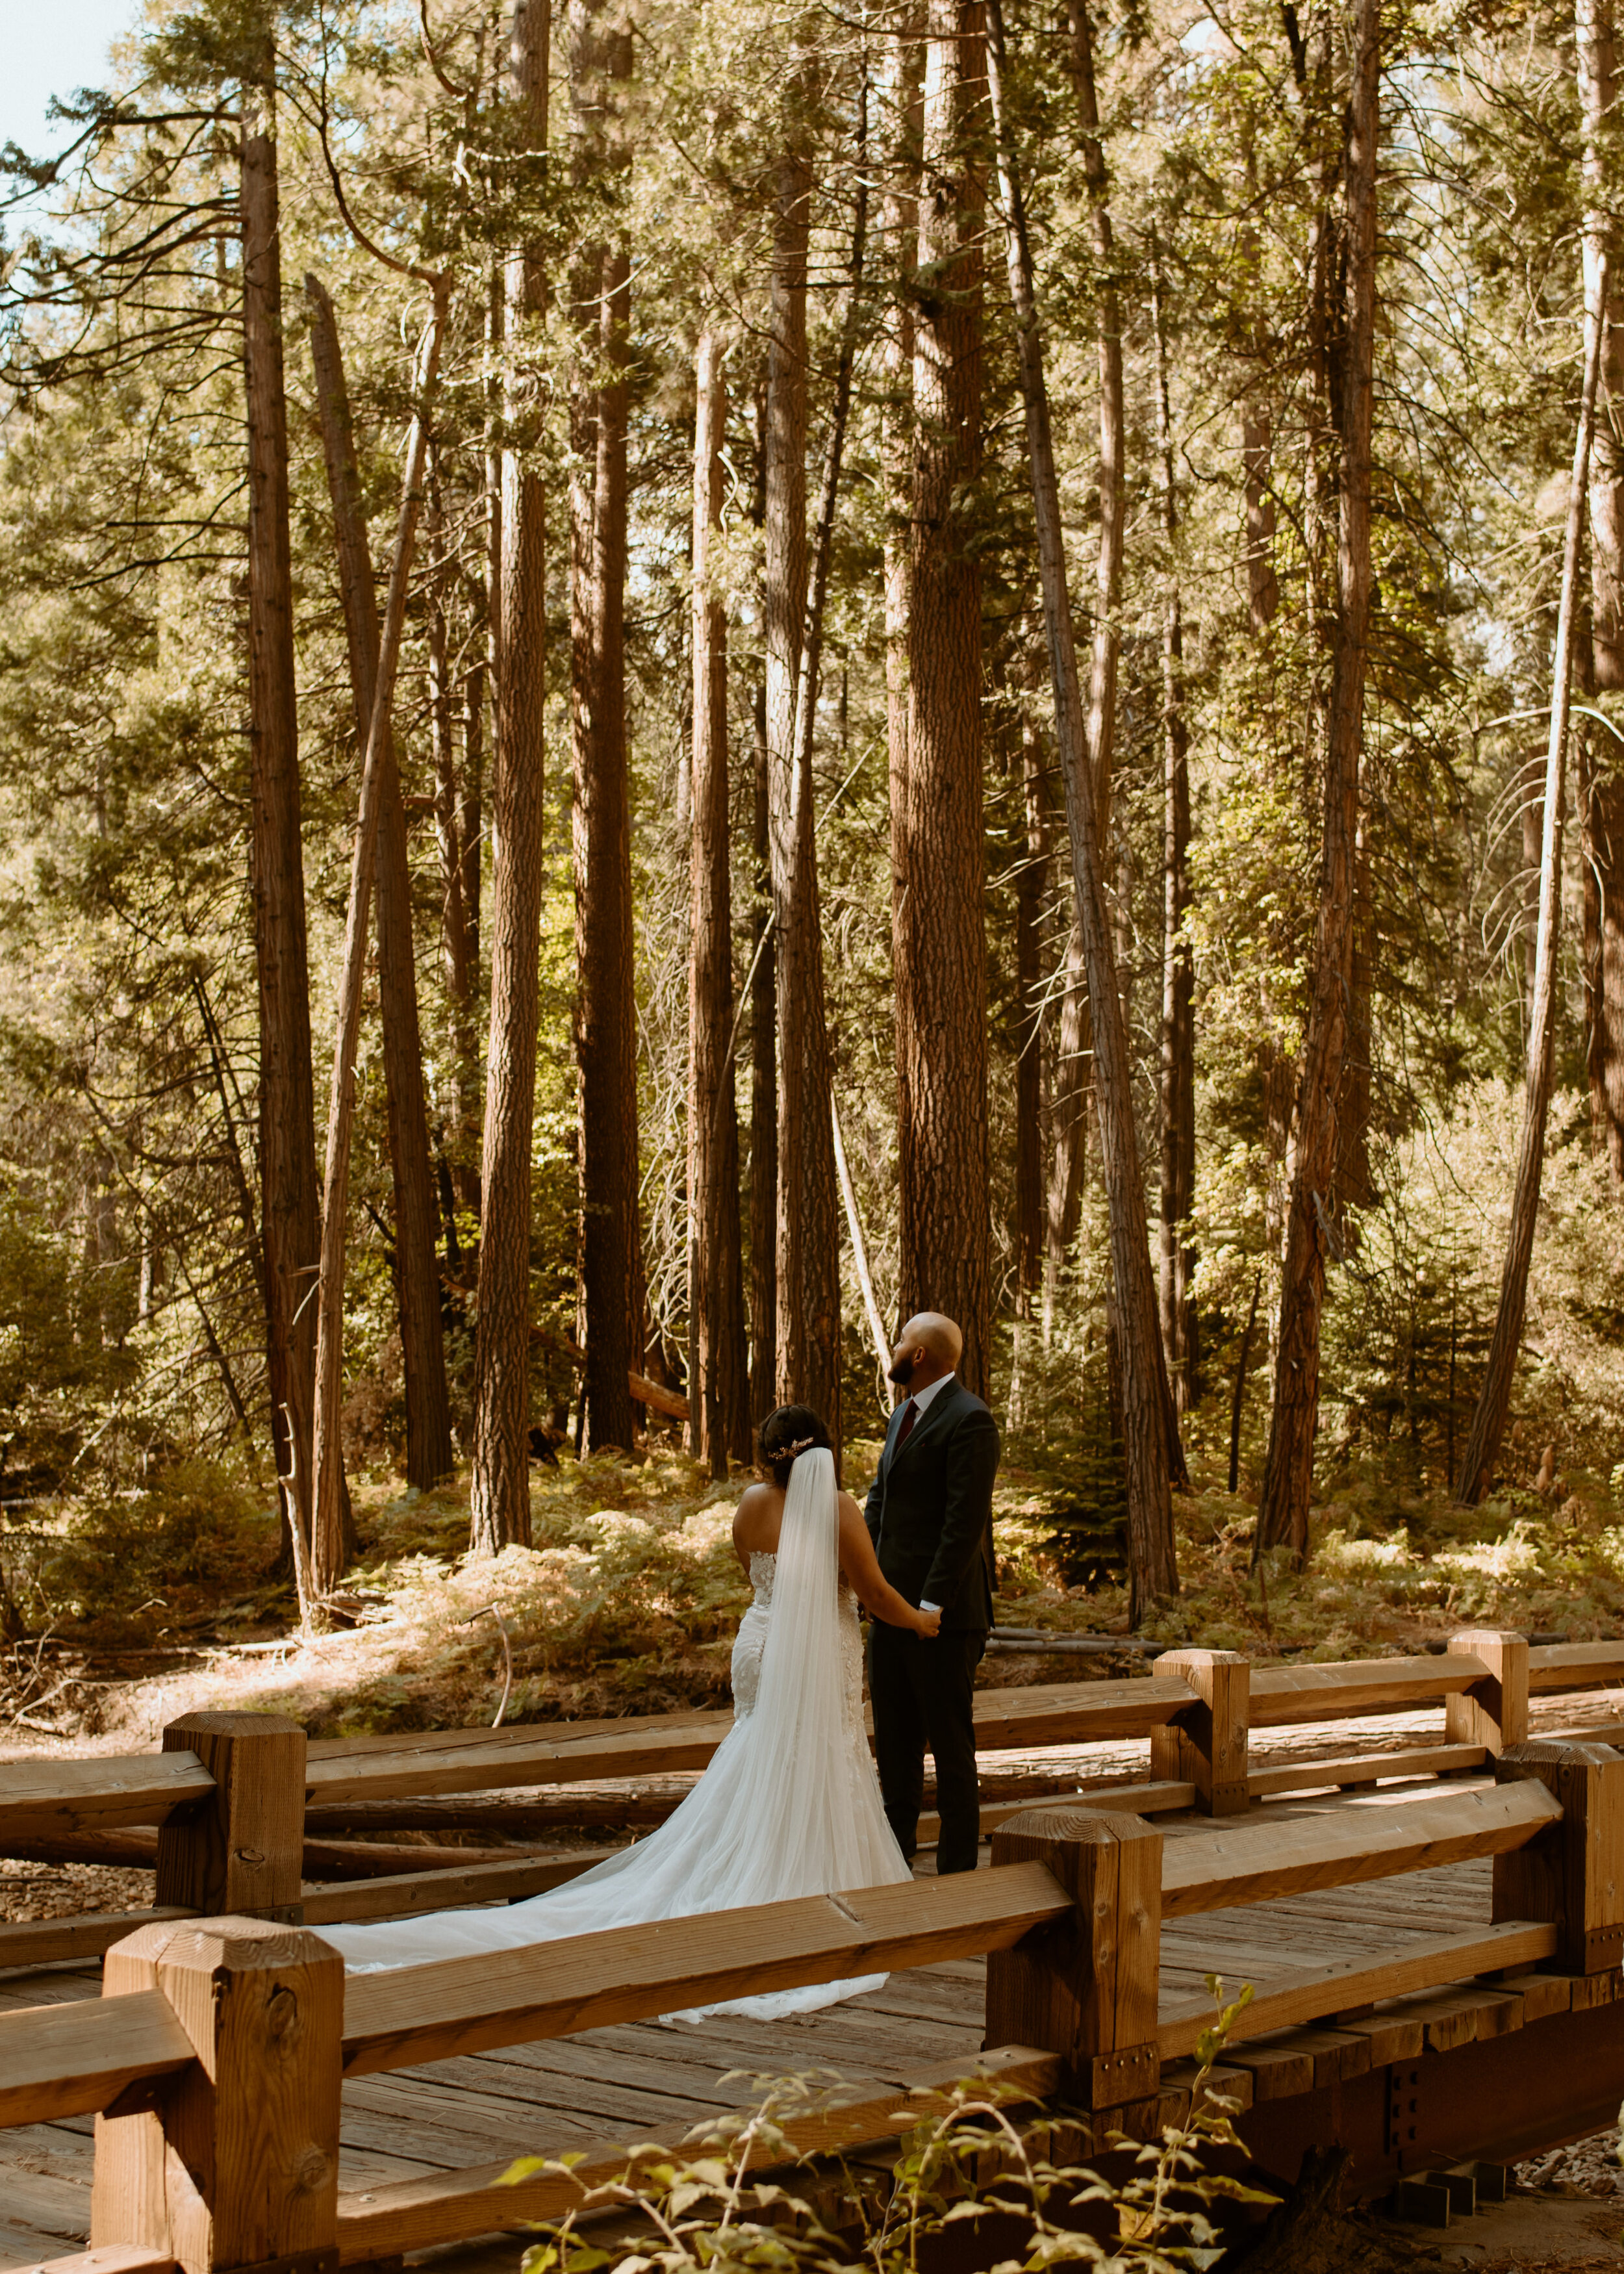 Glacier Point Elopement | Yosemite National Park Elopement and Wedding Photographer | Sunrise adventure elopement | California Elopement Photographer | Yosemite Falls Trail